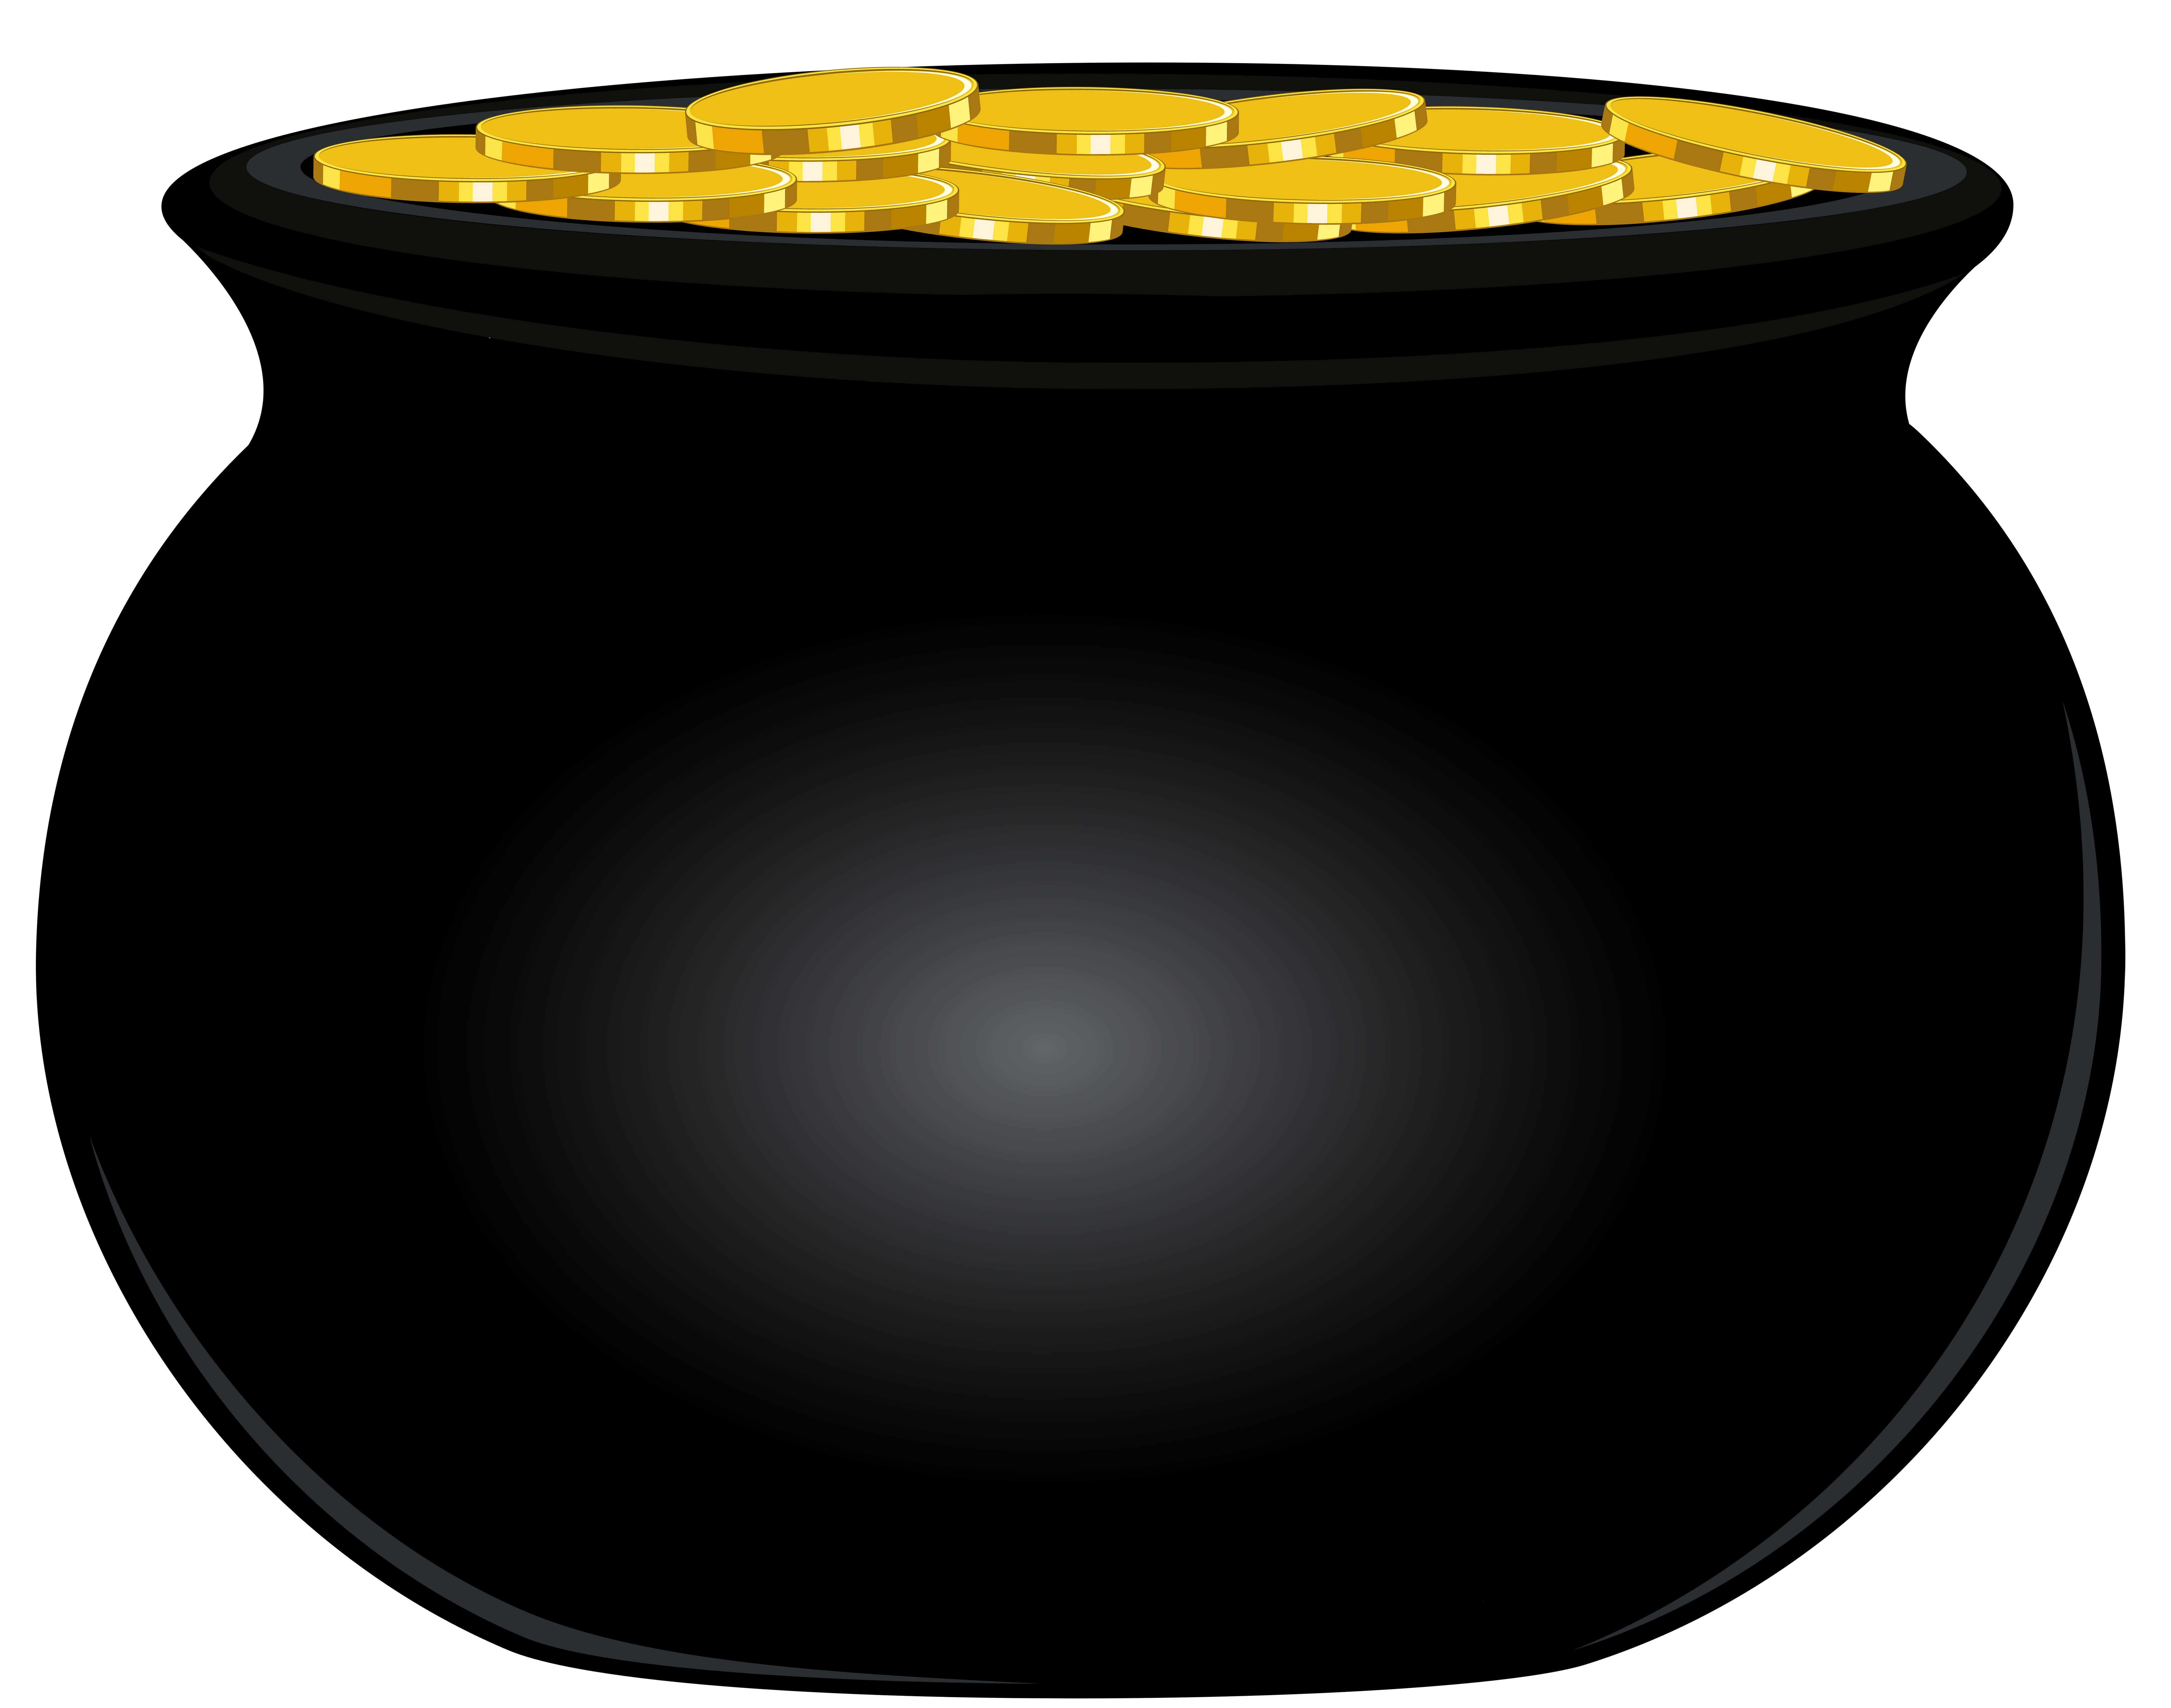 Black Pot of Gold PNG Clip Art Image.